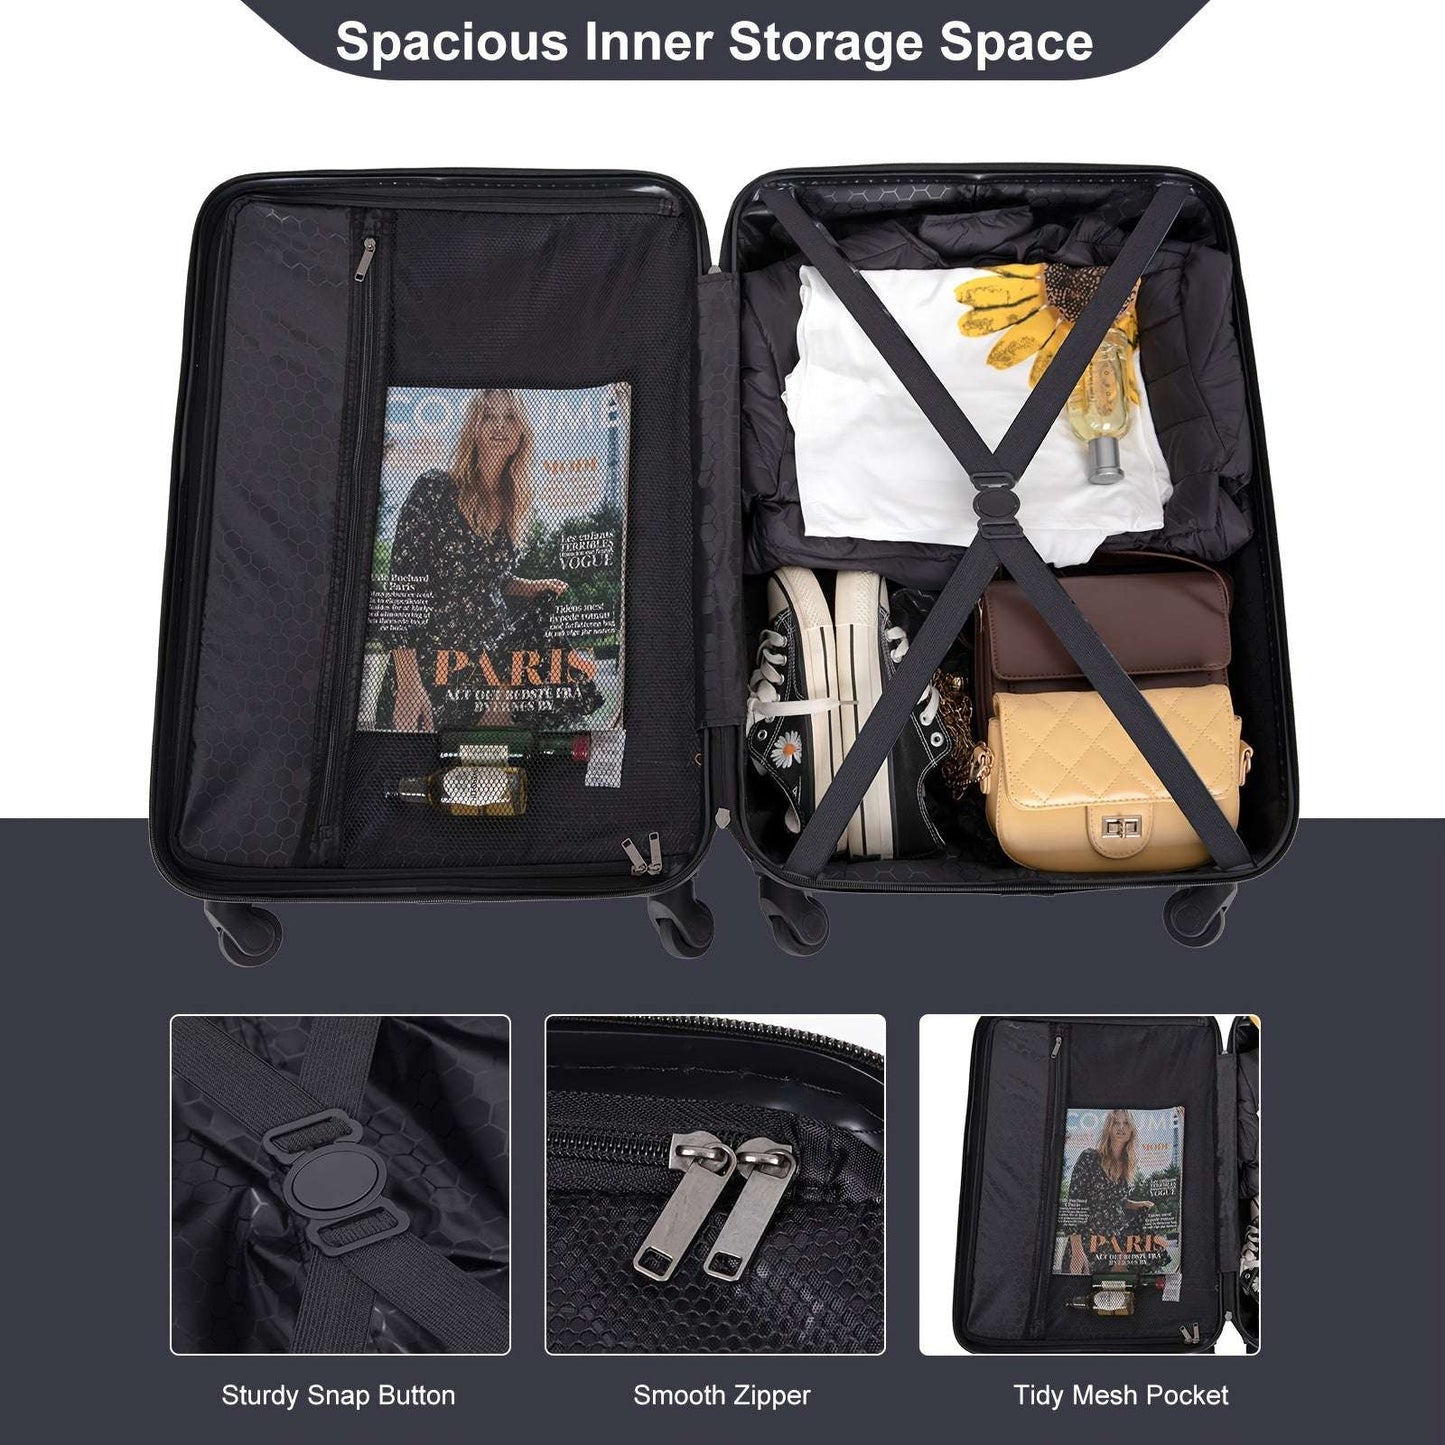 3-Pcs Lightweight ABS Suitcase Set - Telescoping Handle, Spinner Wheels, TSA-Approved Combination Lock 140 OK•PhotoFineArt OK•PhotoFineArt